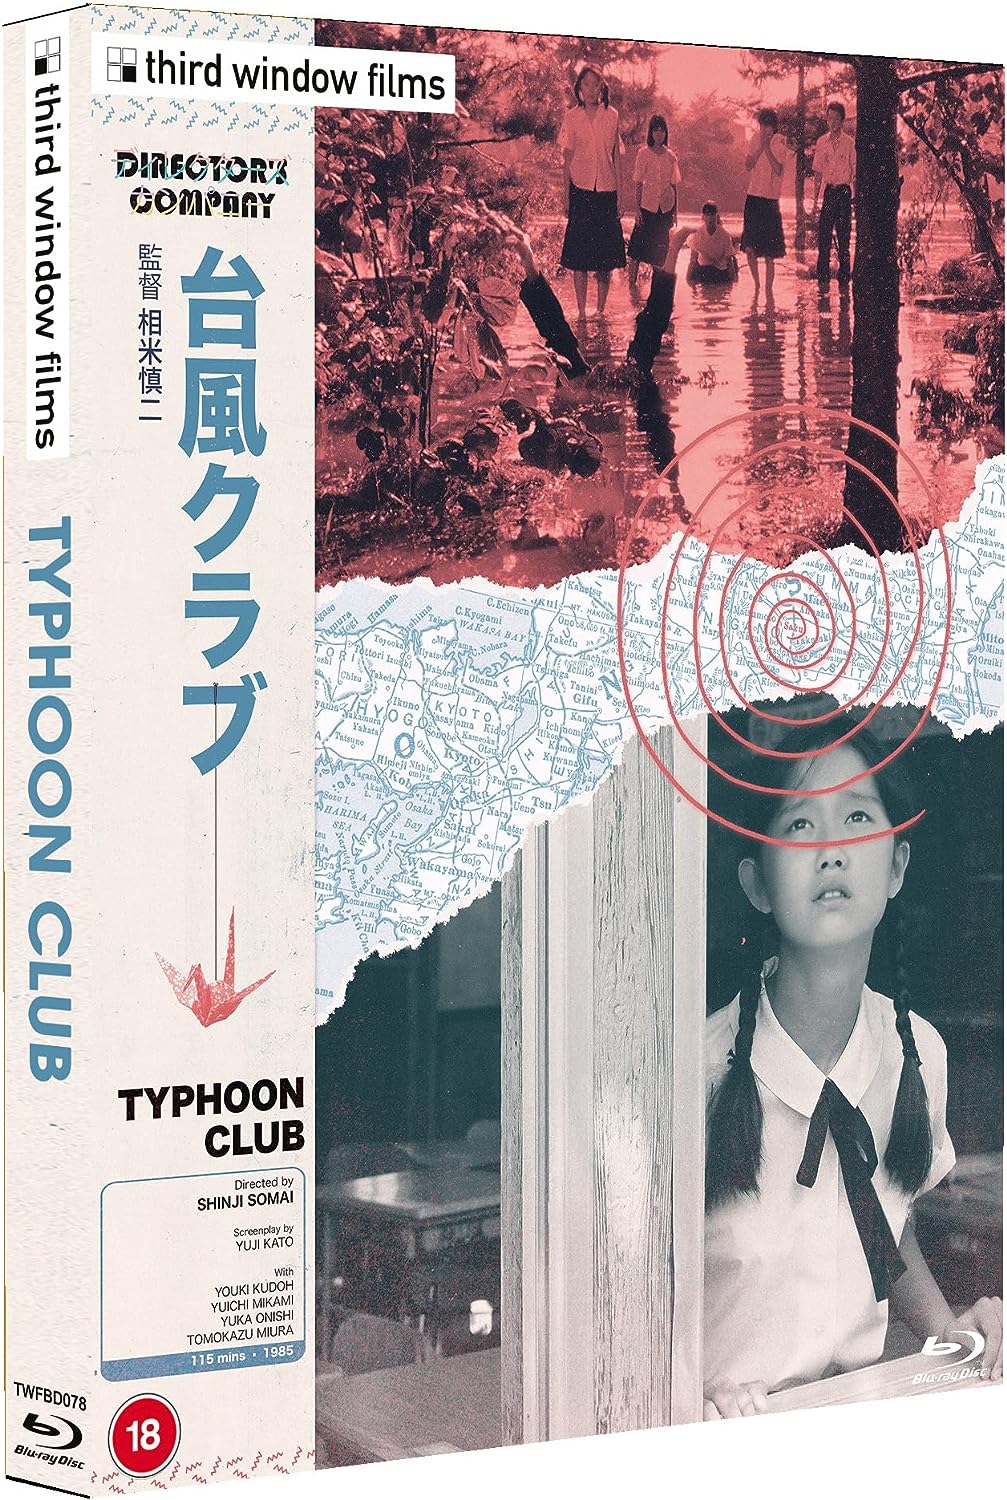 Typhoon Club Limited Edition Third Window Blu-Ray [NEW] [SLIPCOVER]